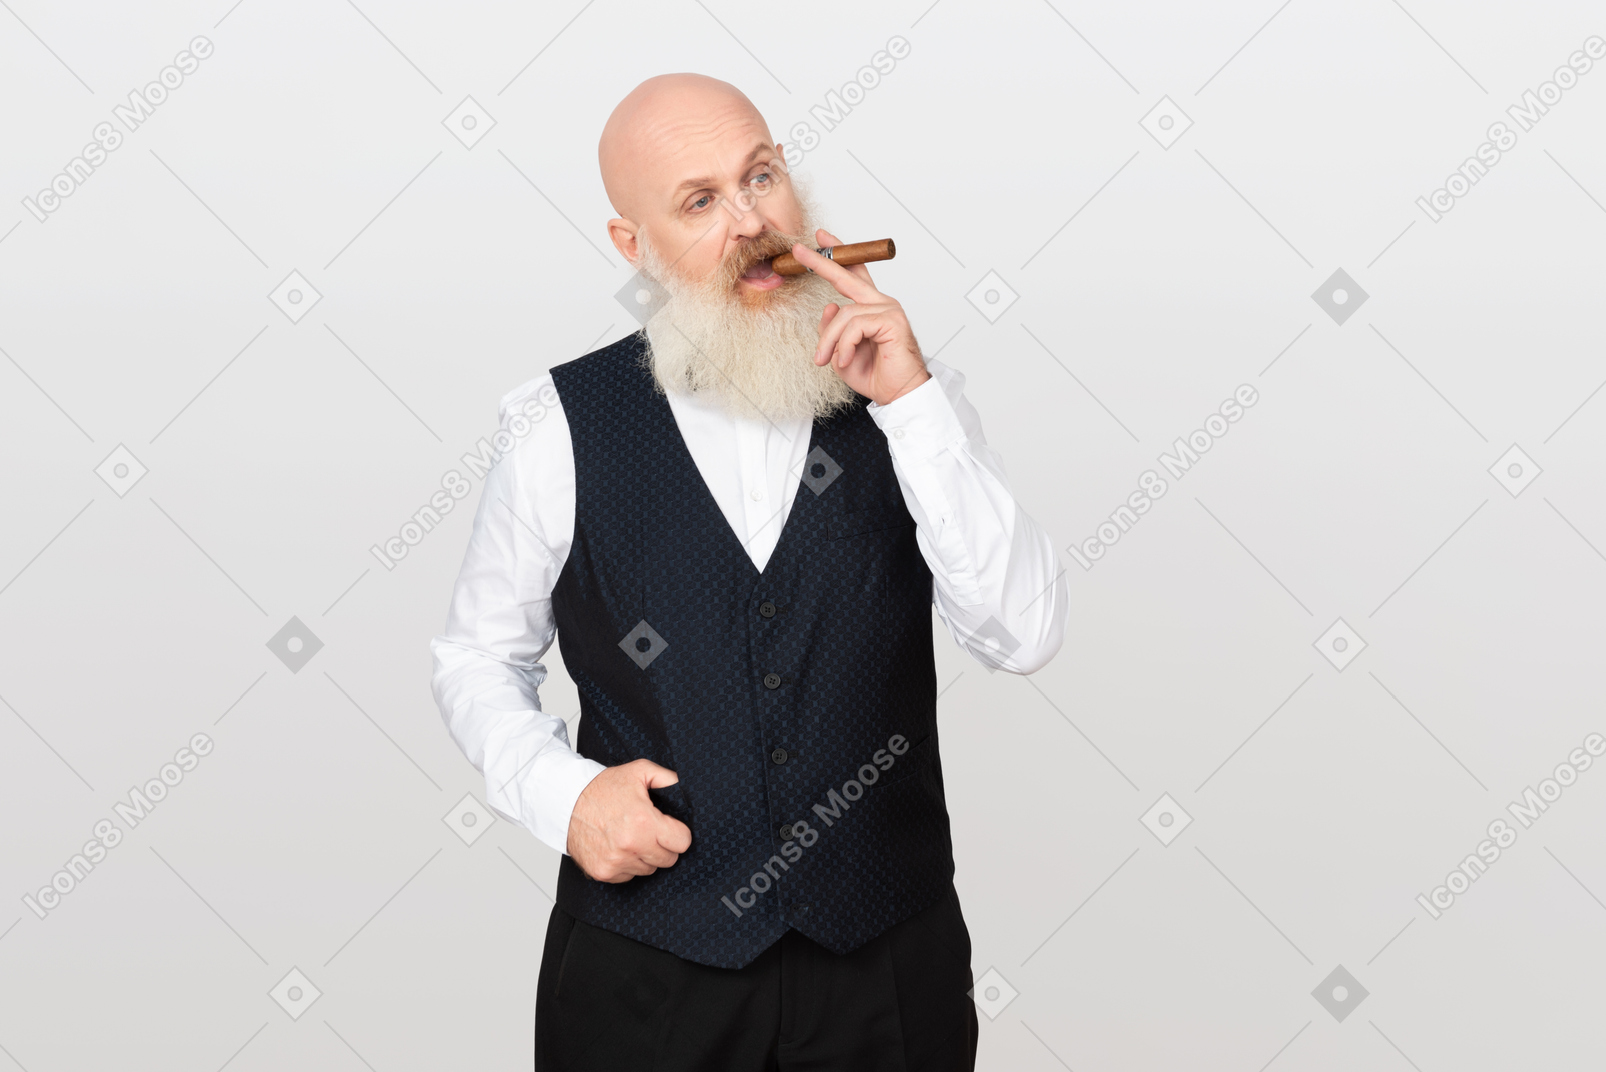 I've noticed that cigar aroma brings back memories